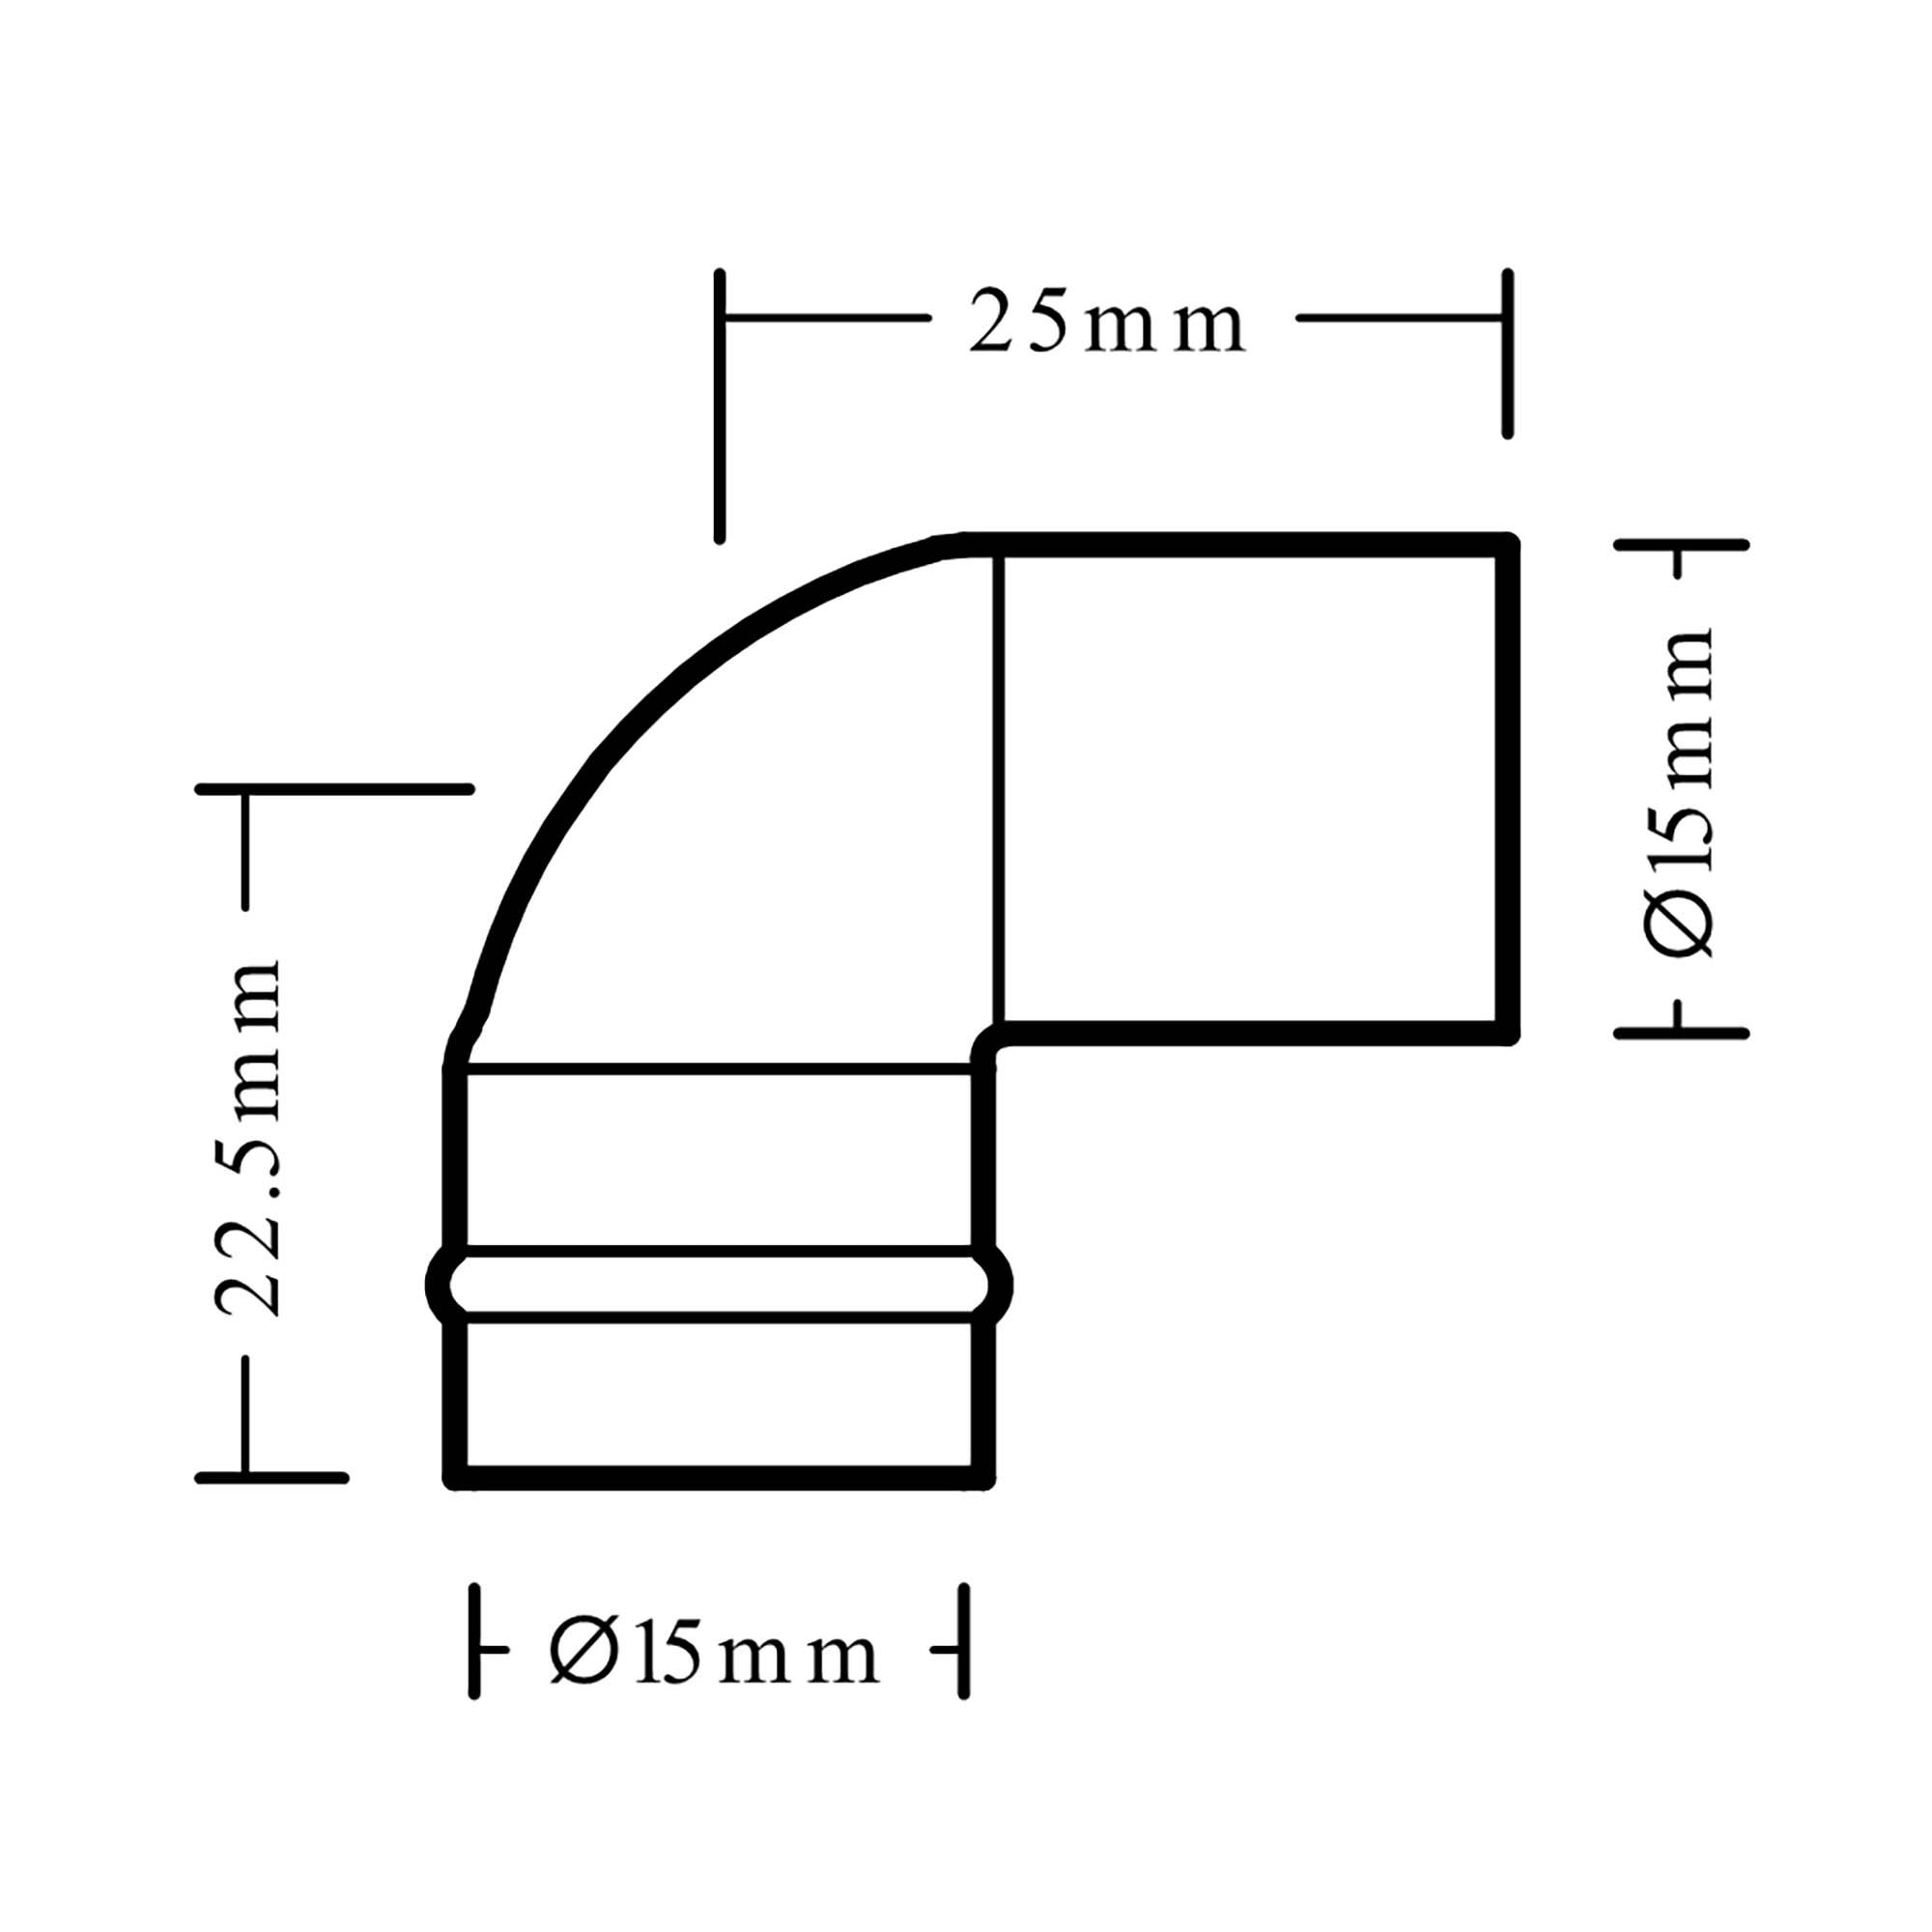 Solder ring 90° Street Pipe elbow (Dia)15mm 15mm